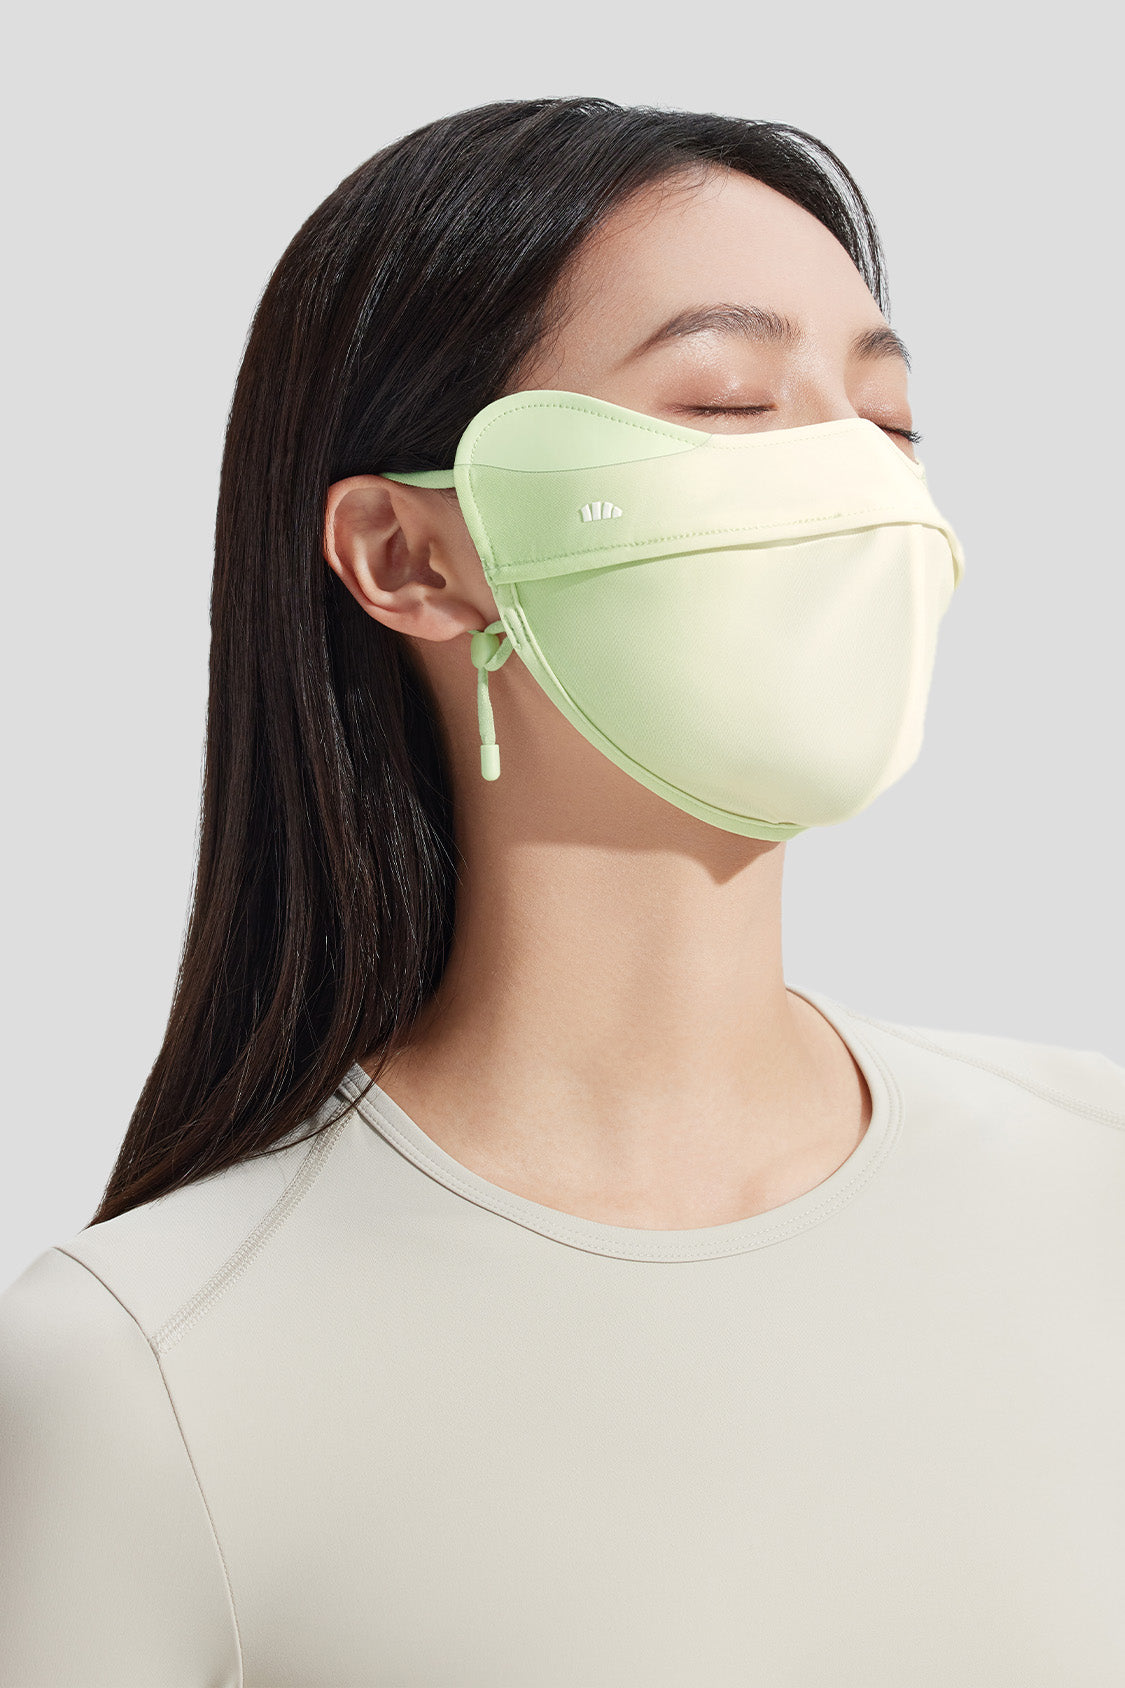 Biny - Women's Breathable Face Mask UPF50+